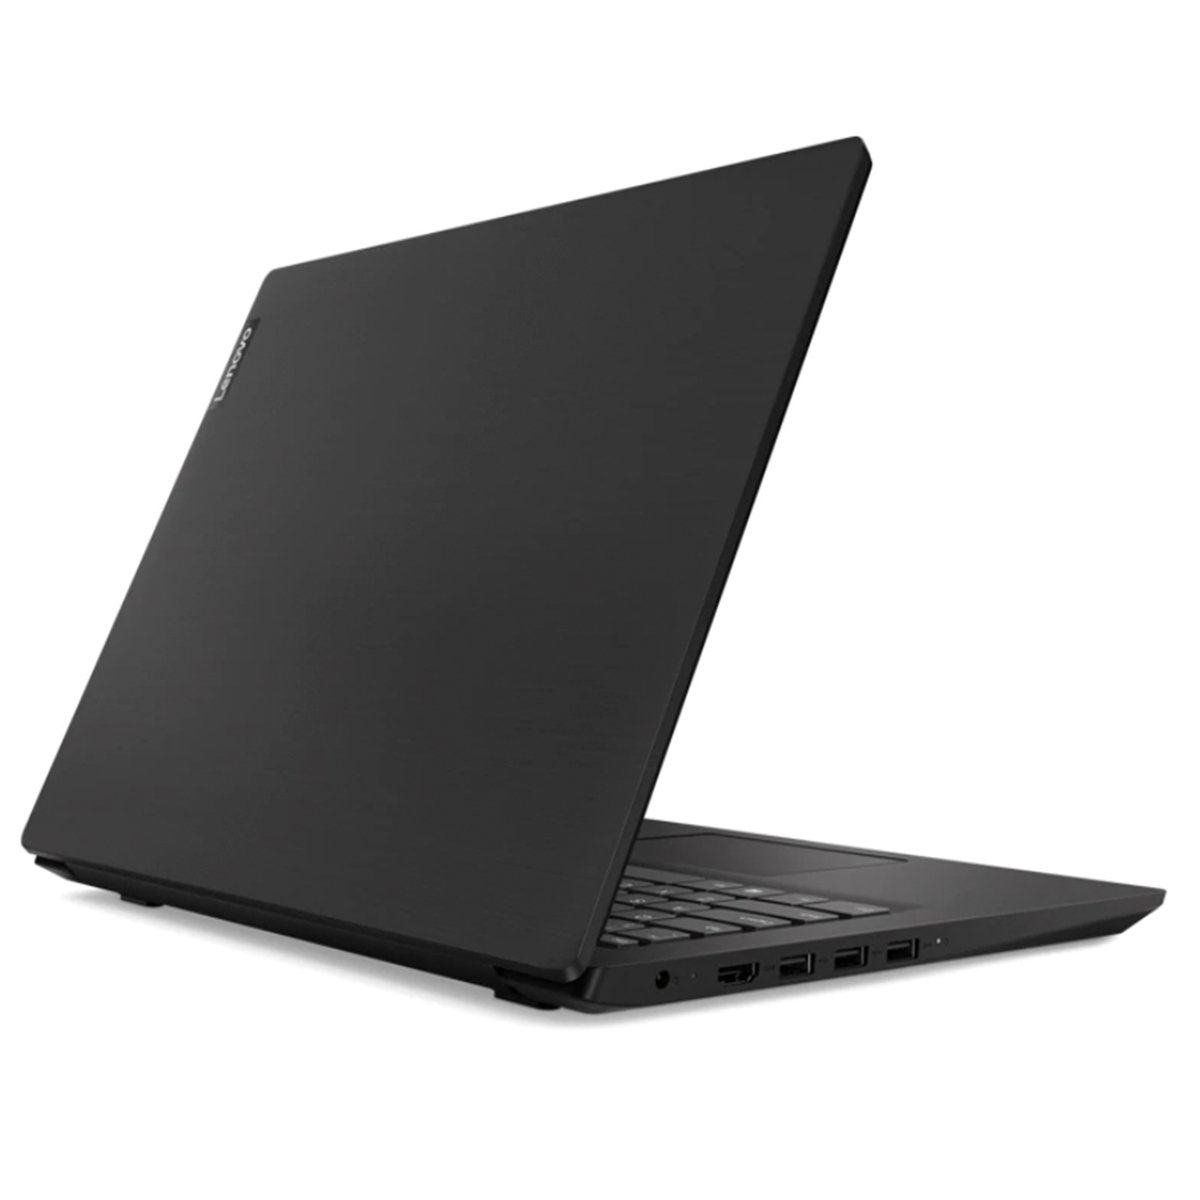 Lenovo IdeaPad S145-81UV0081AX Black (AMD Ryzen,8GB RAM,1TB HDD,128GB SSD,Integrated VGA,14.0",Windows 10)